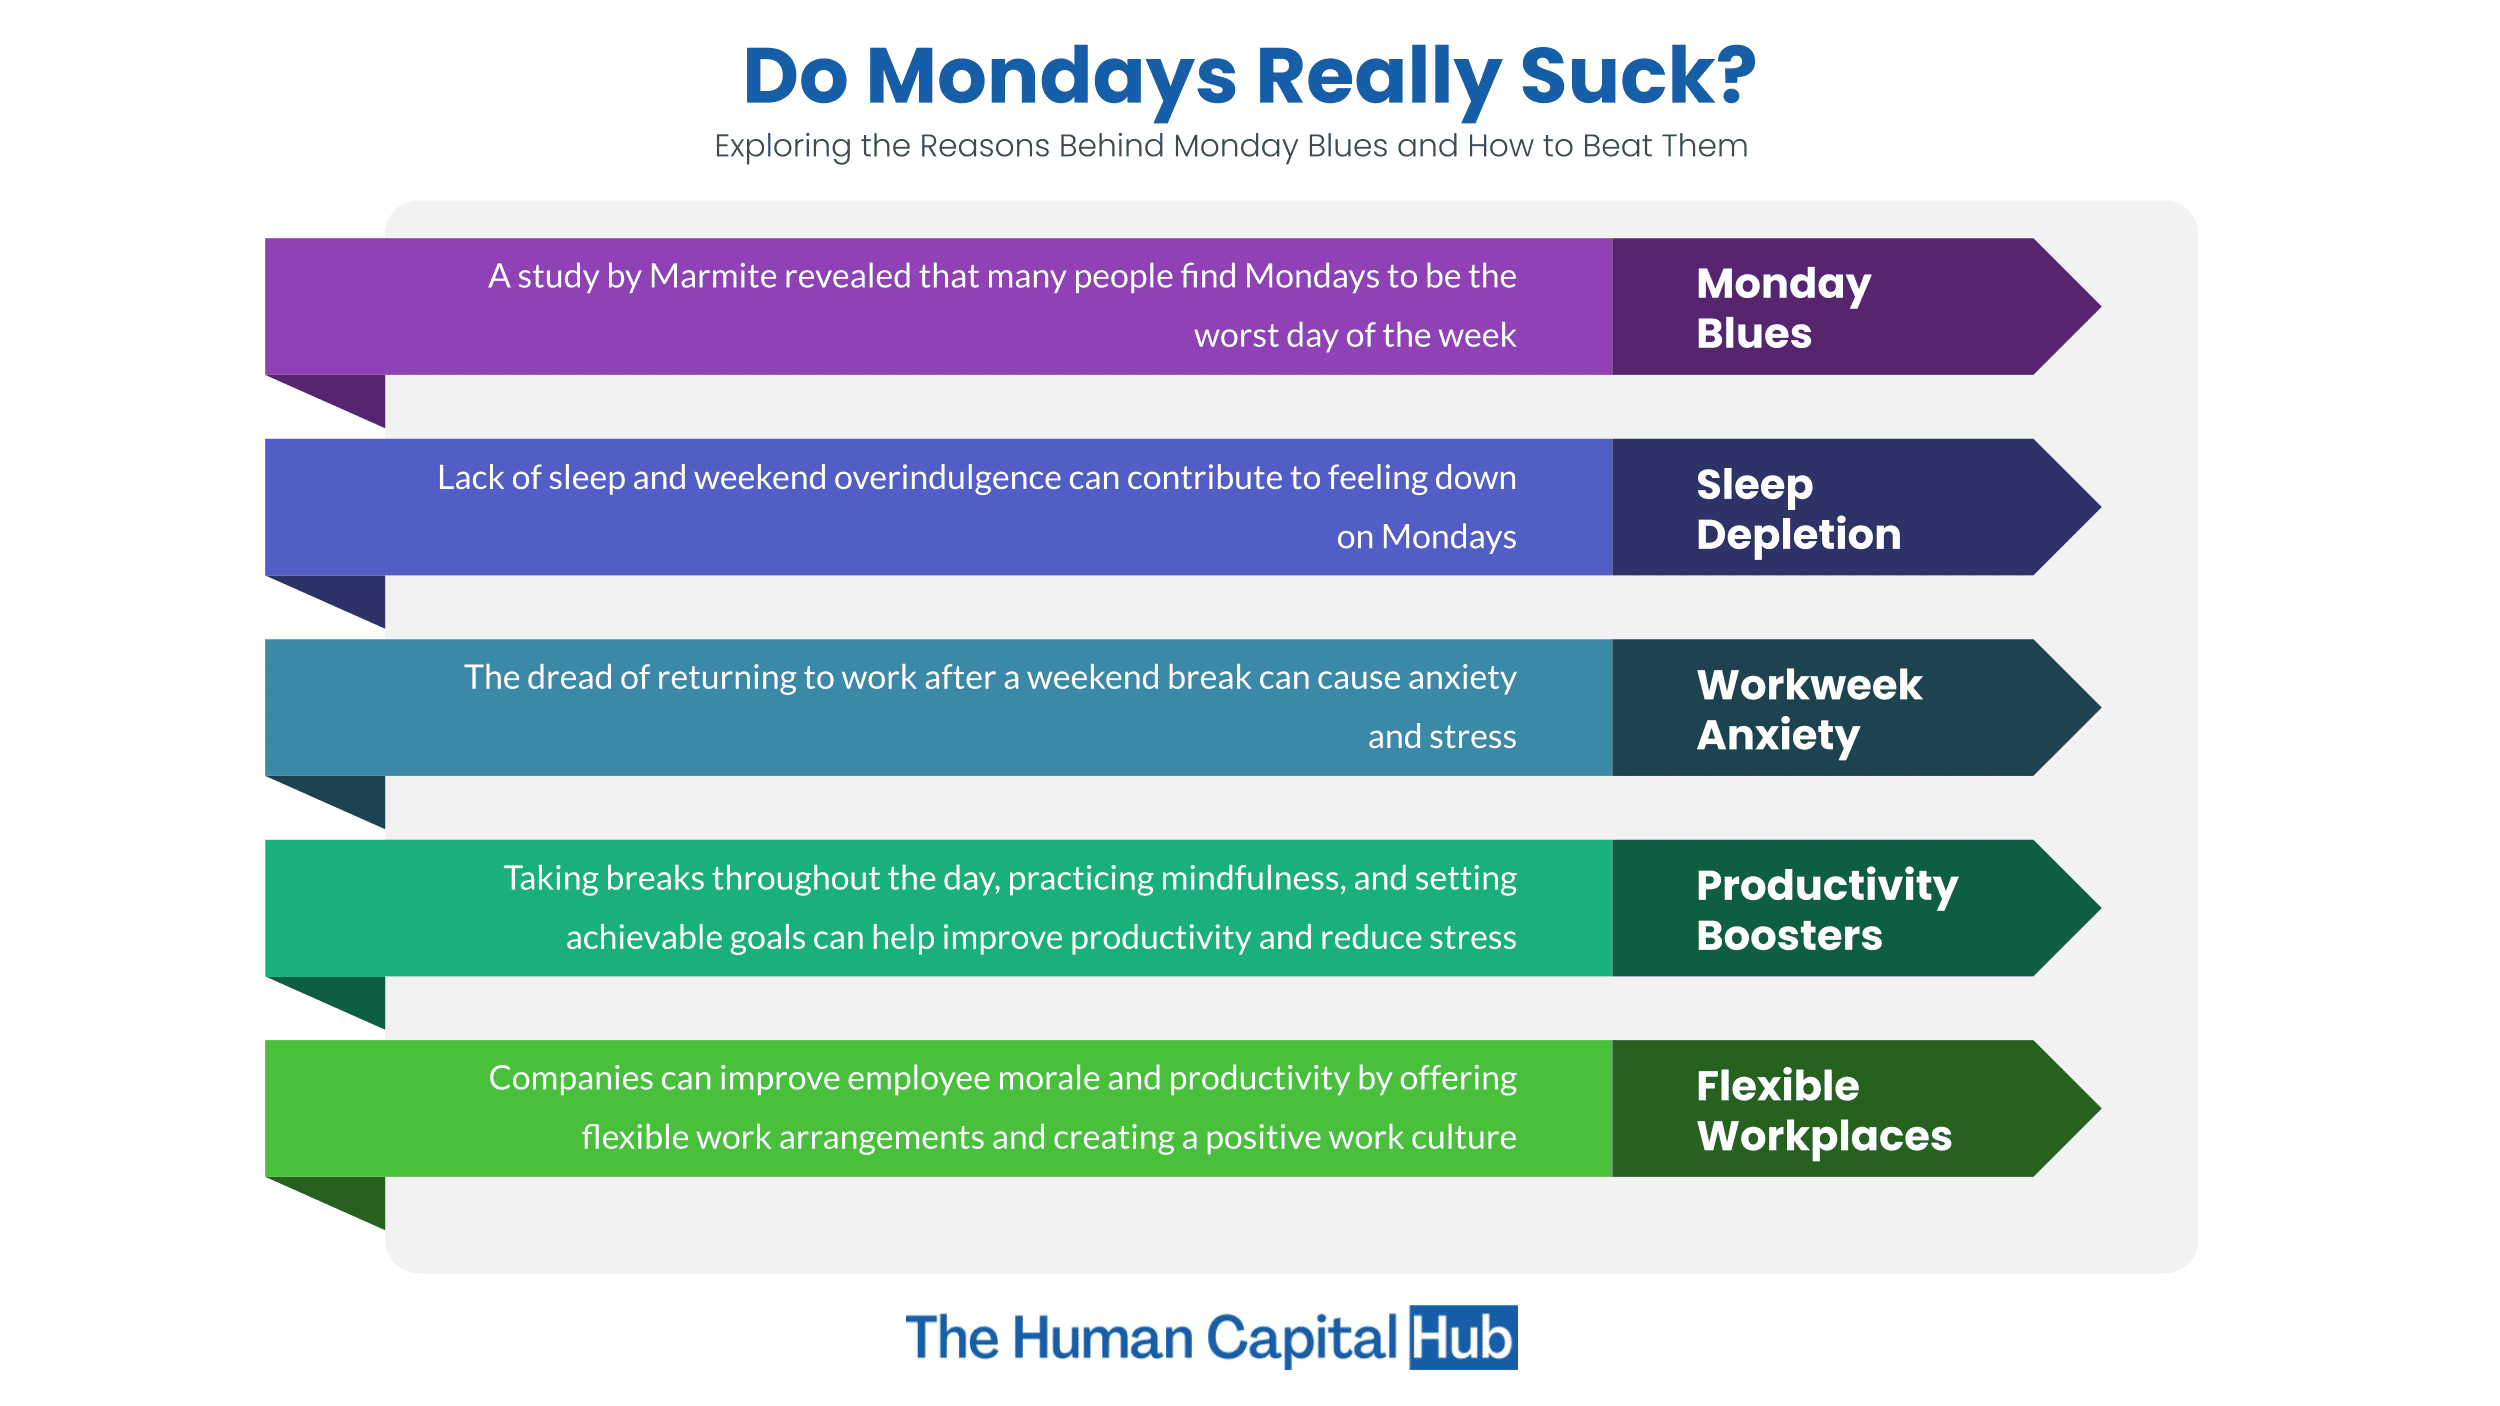 Do Mondays really suck?